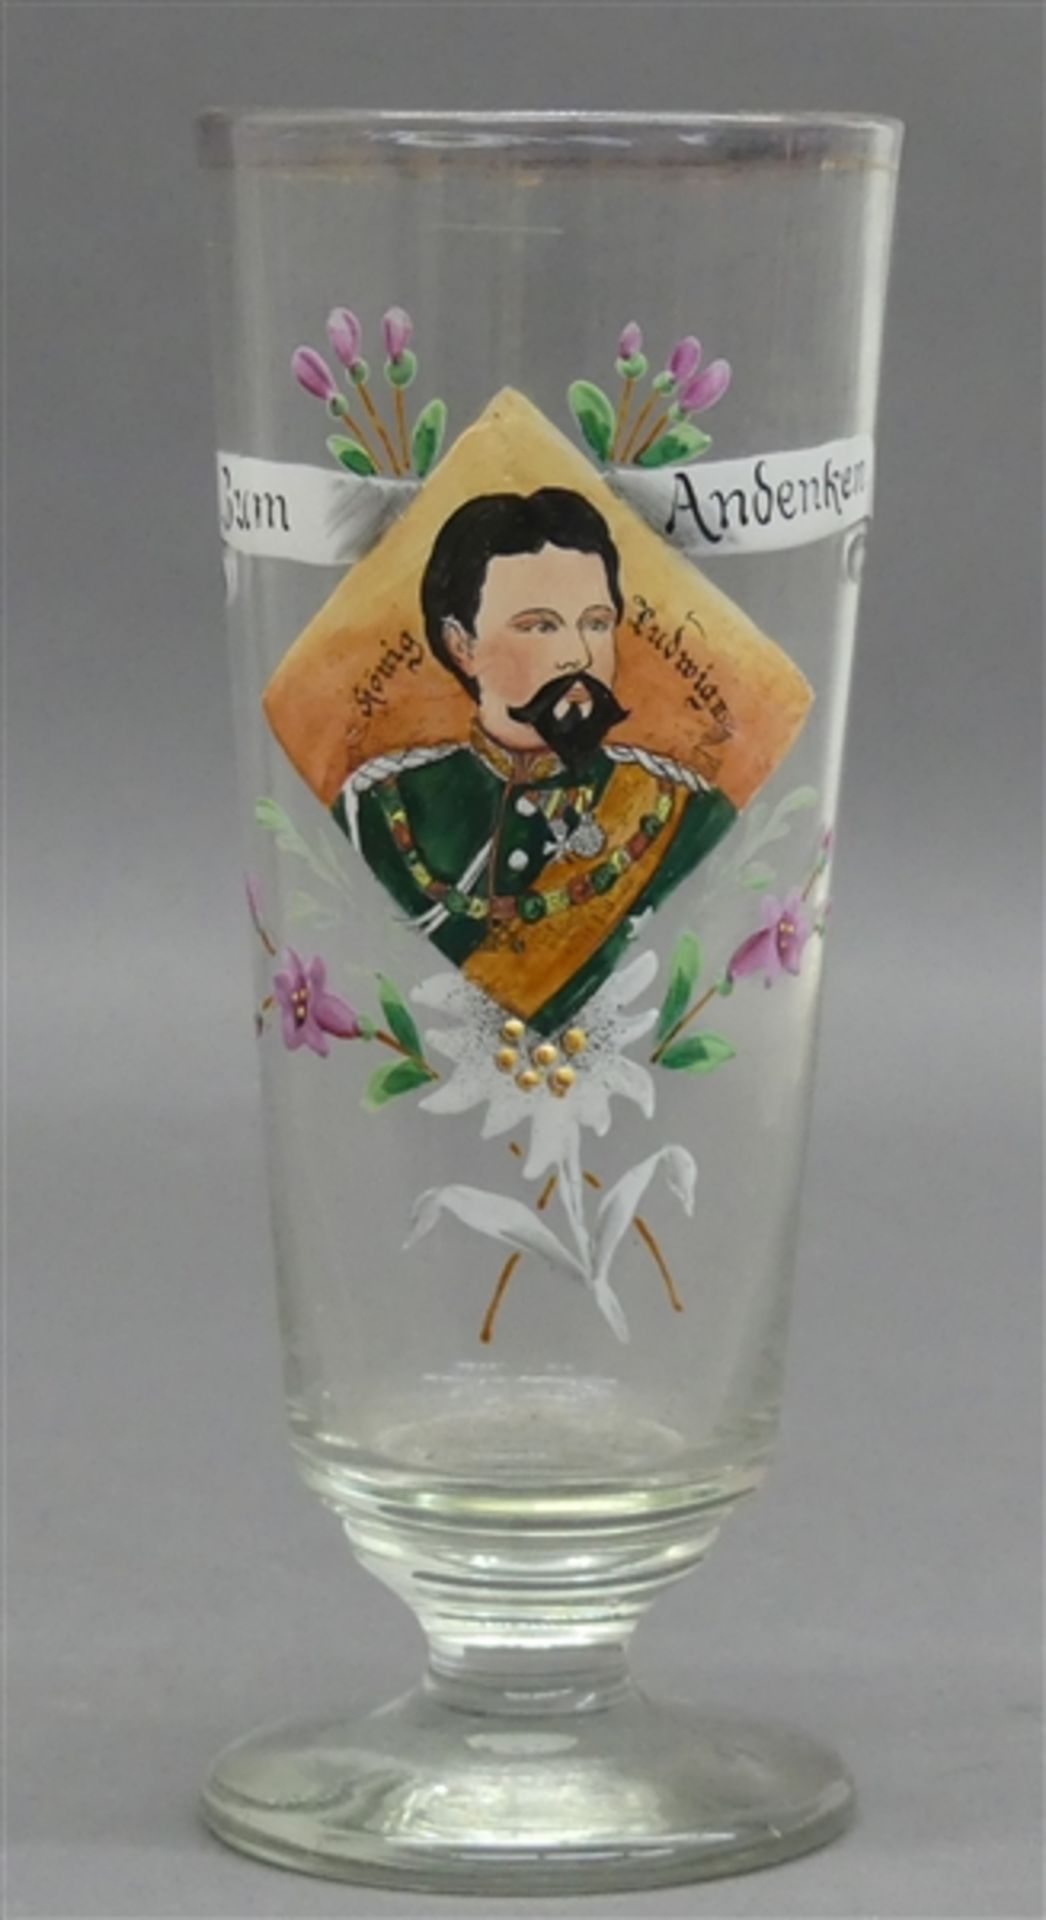 Weizenglas farblos, bemalt, König Ludwig ll., "zum Andenken", h 21 cm,